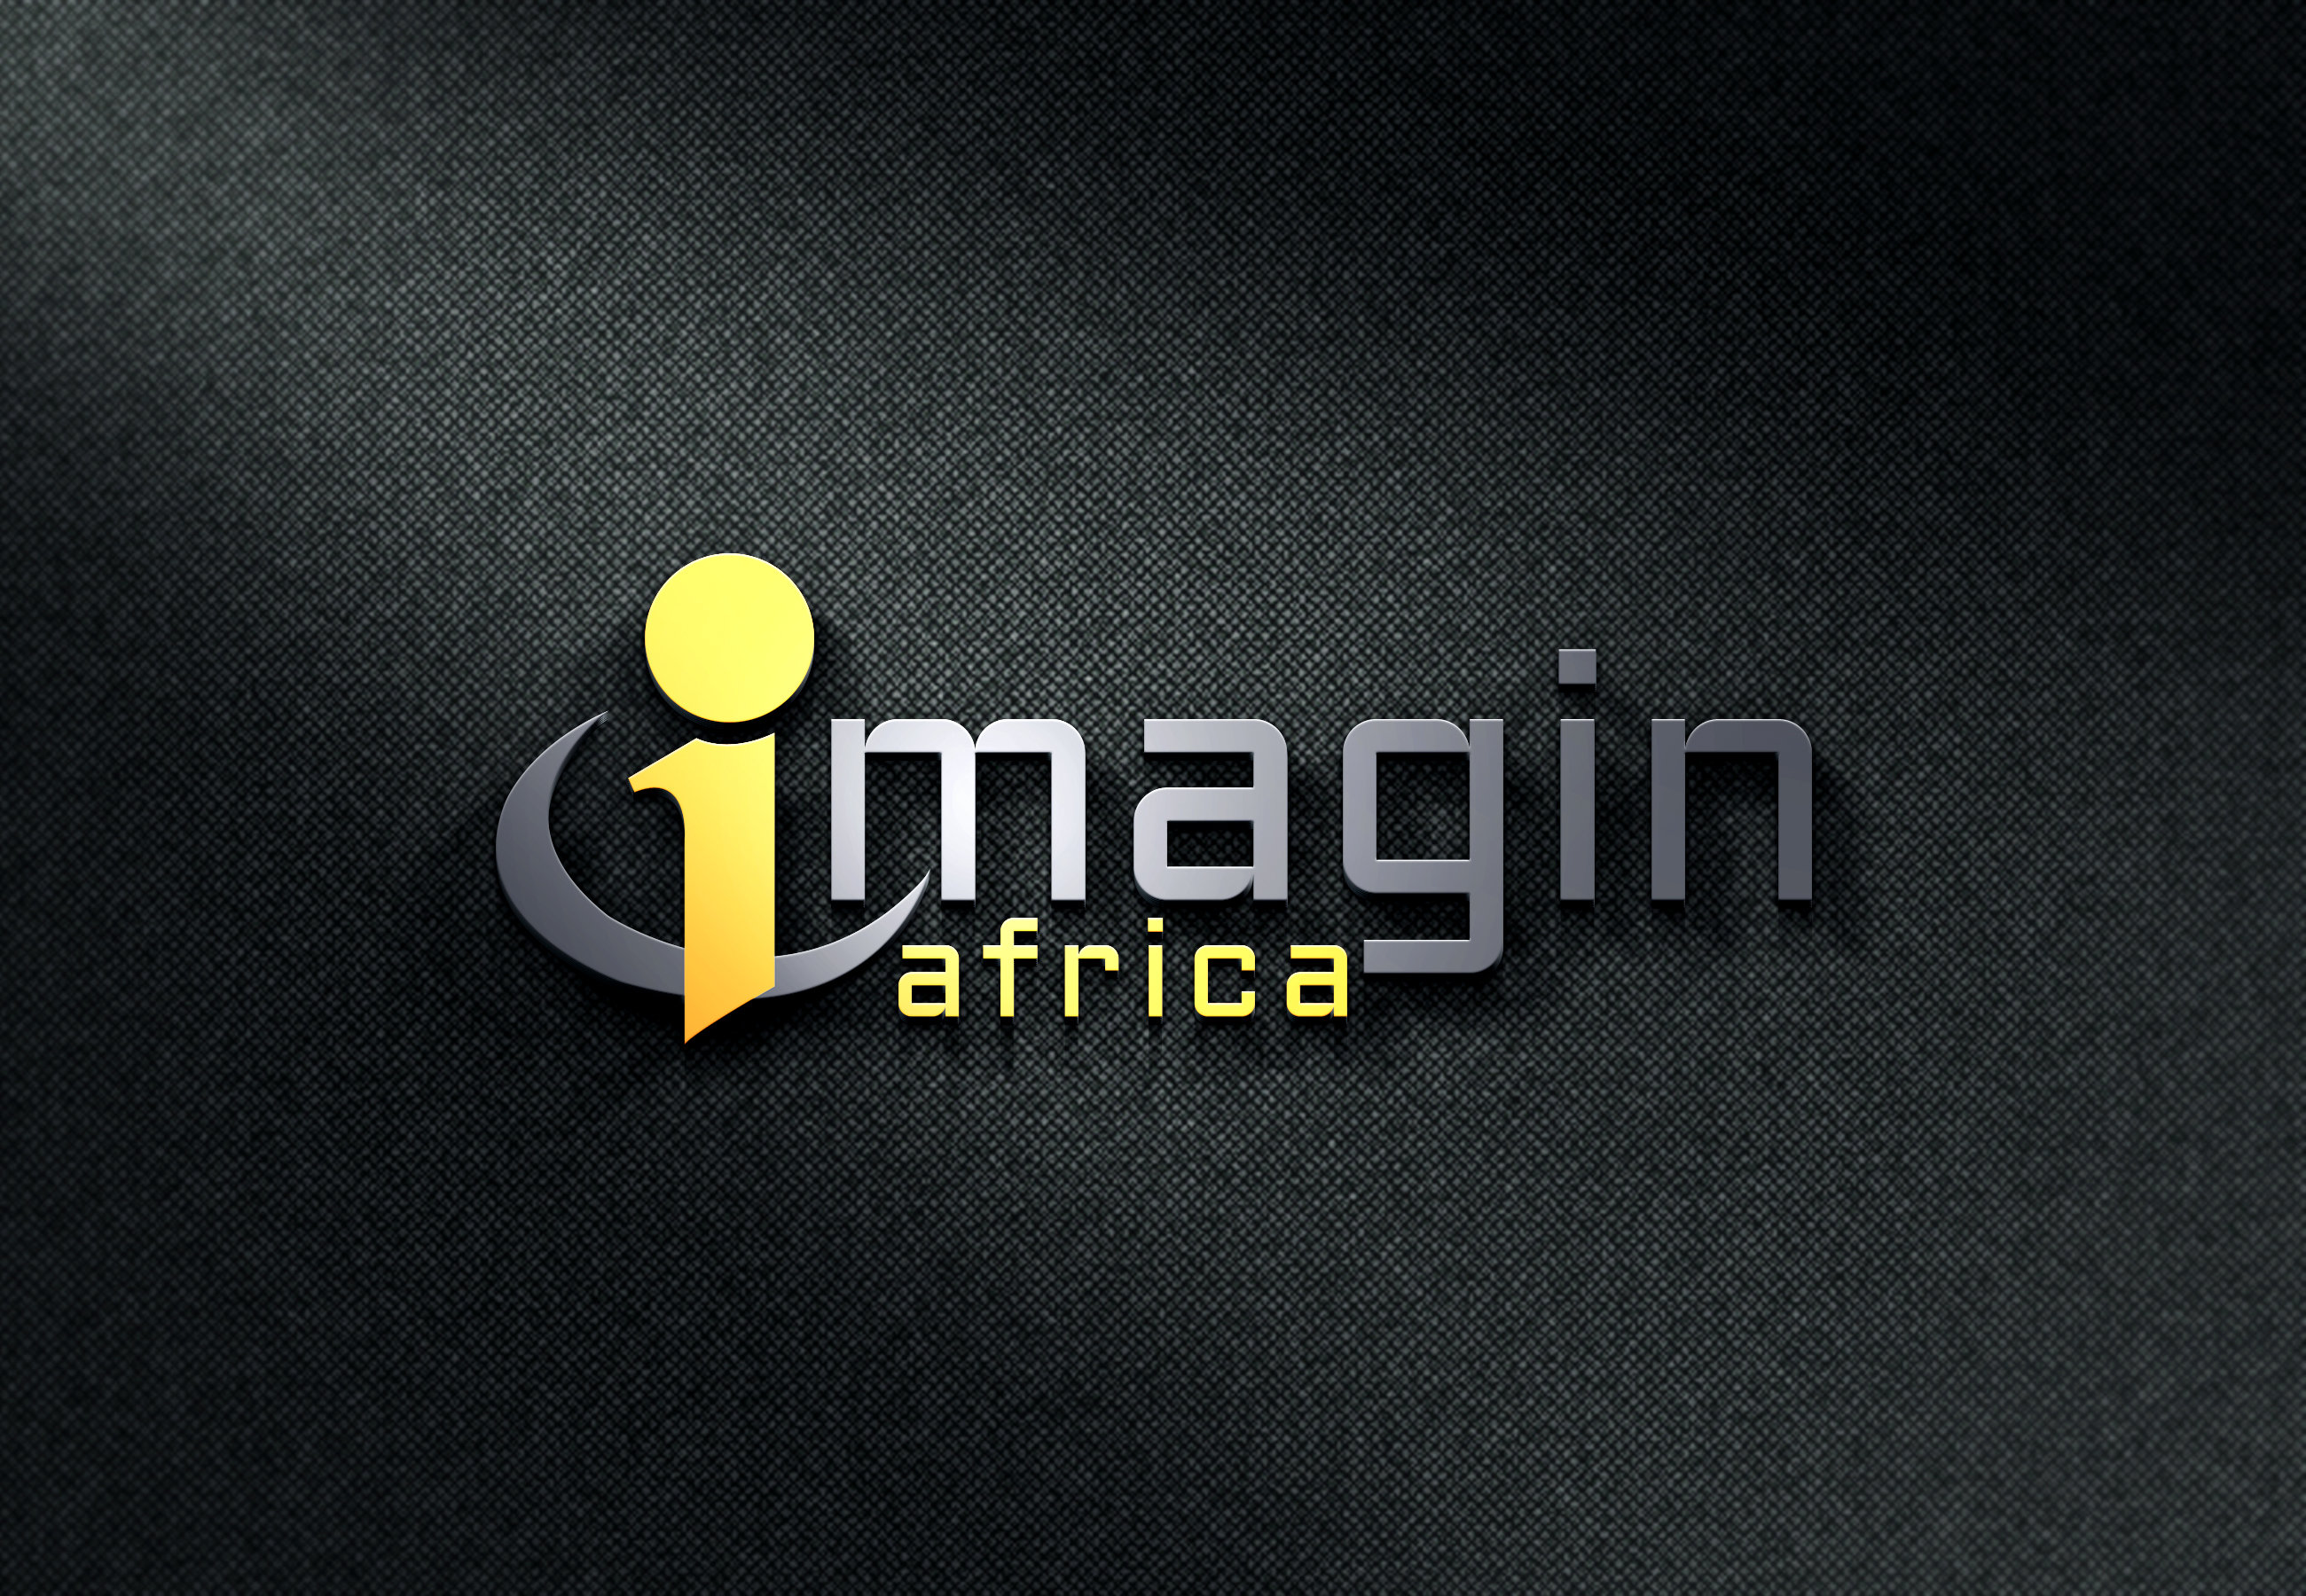 ImaginiAfrica pour les professionnels africains